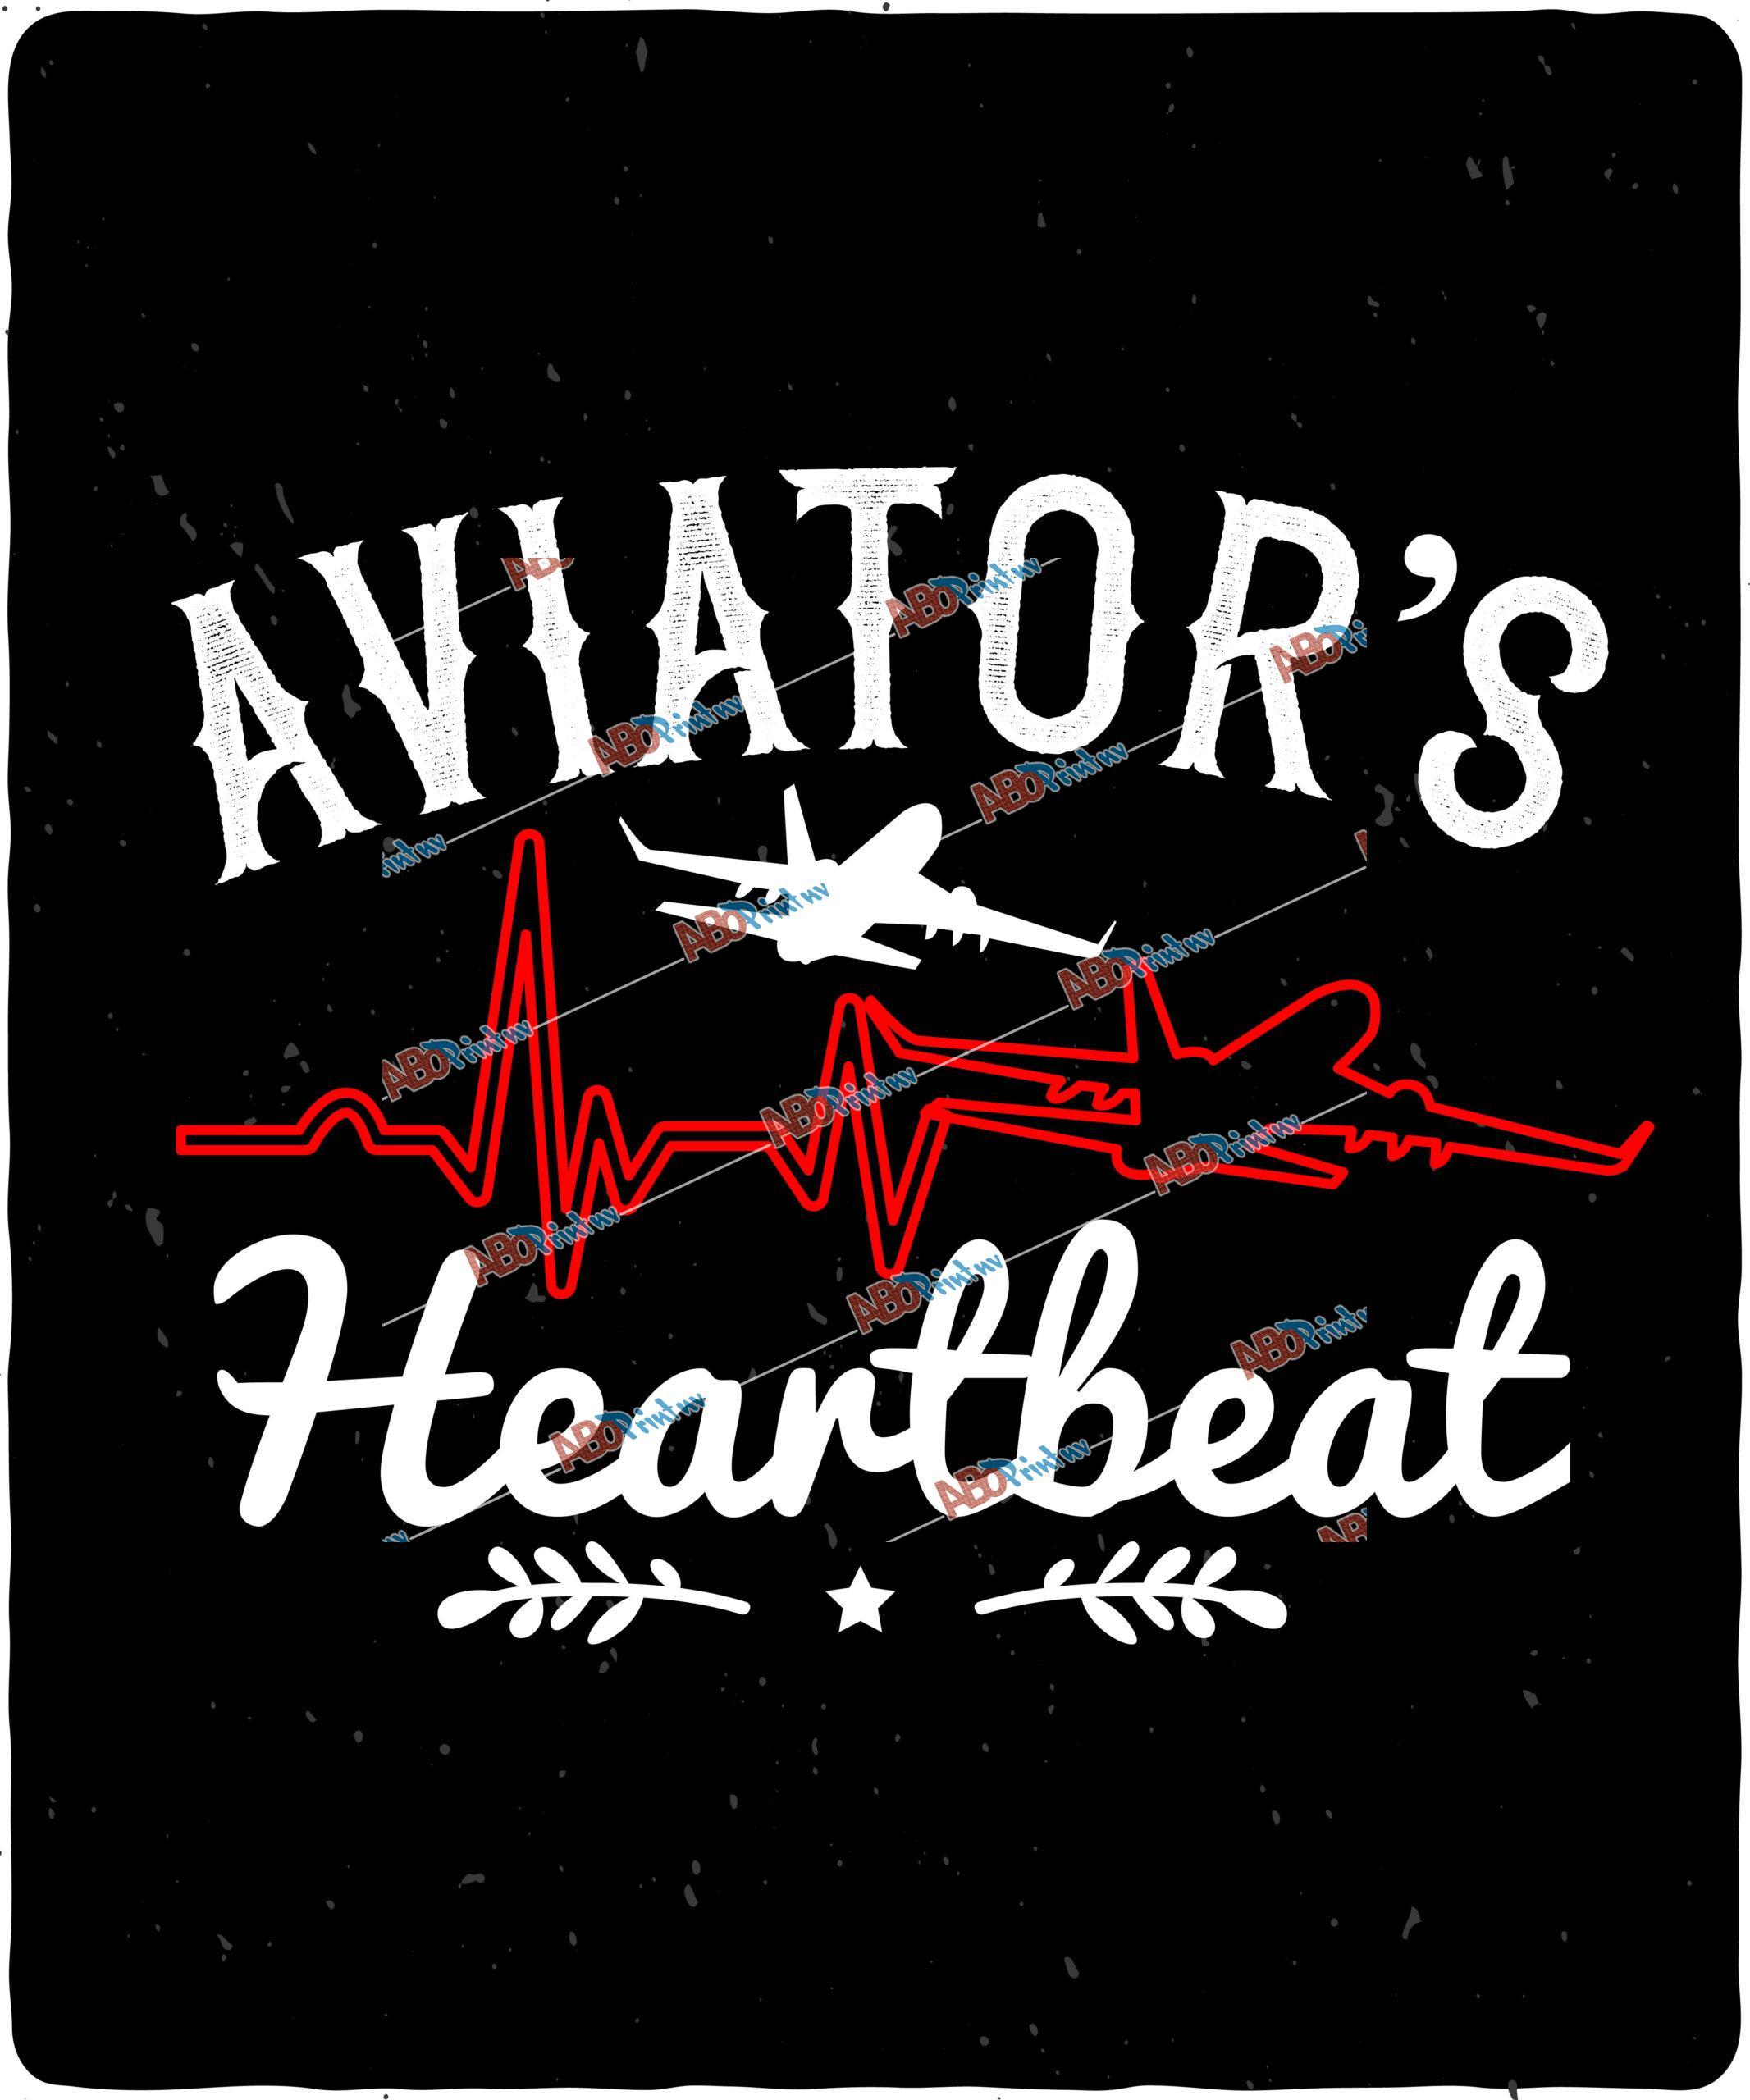 aviator's heartbeat